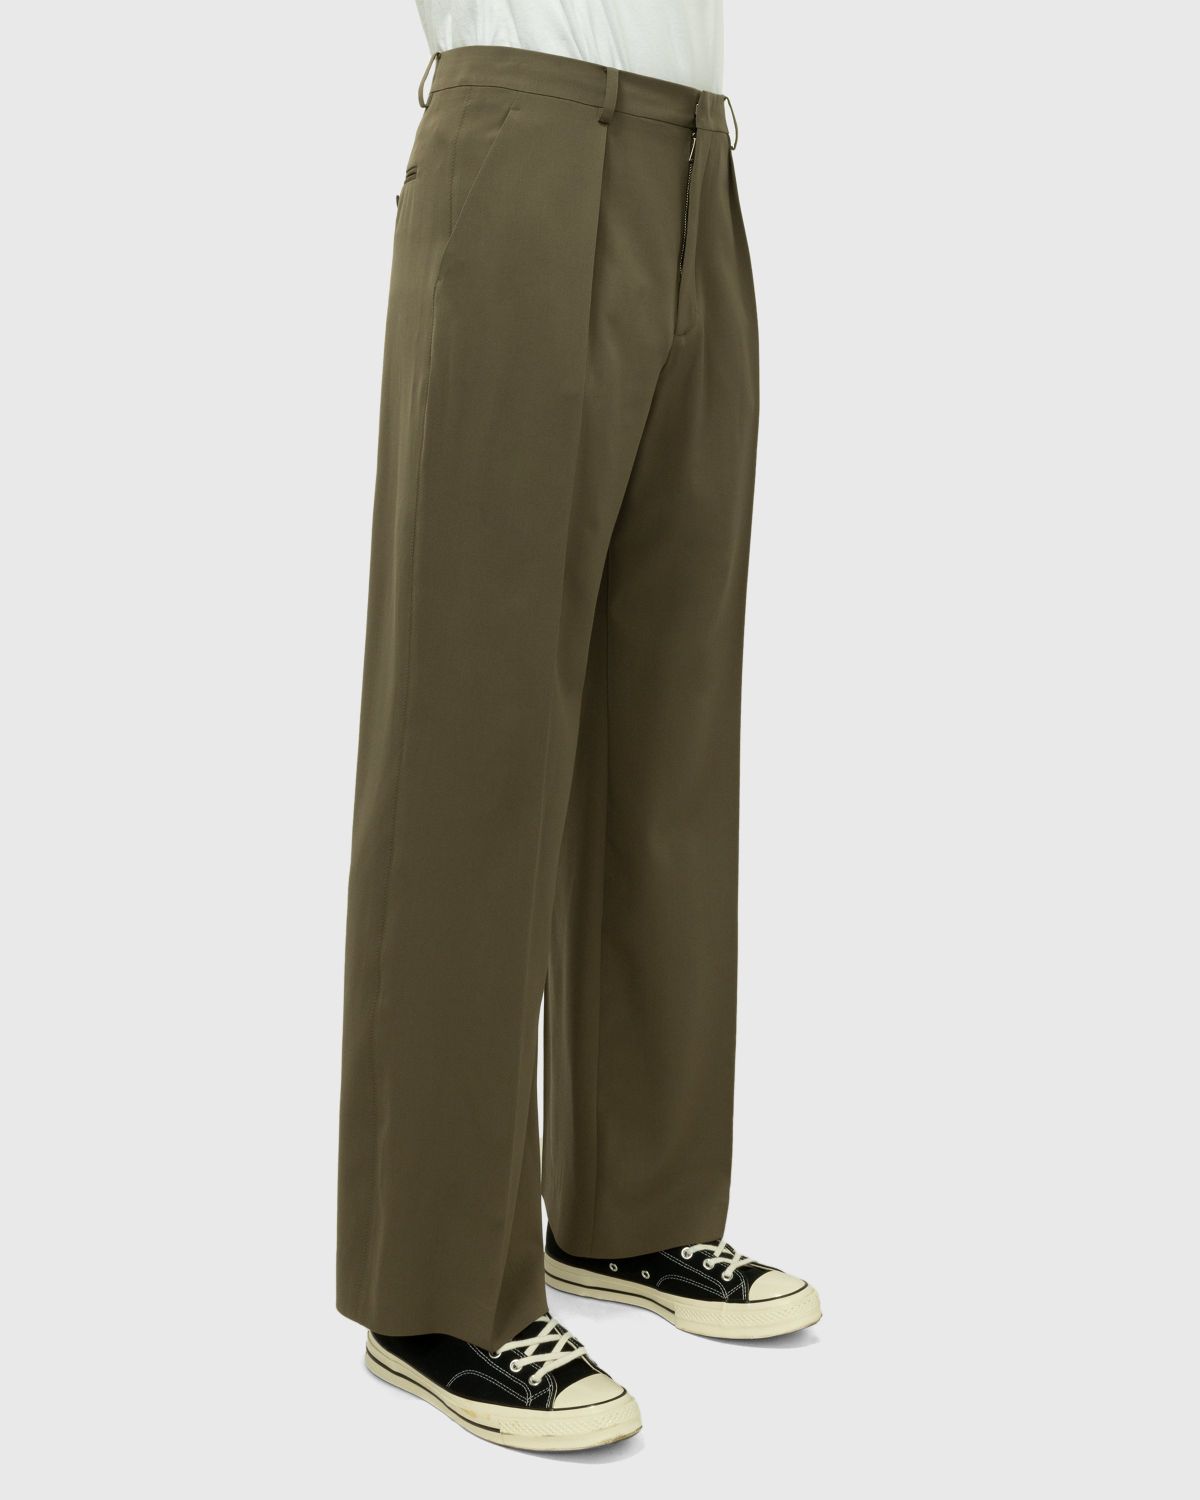 Jean Paul Gaultier – Classic Woven Trouser Khaki - Trousers - Brown - Image 4